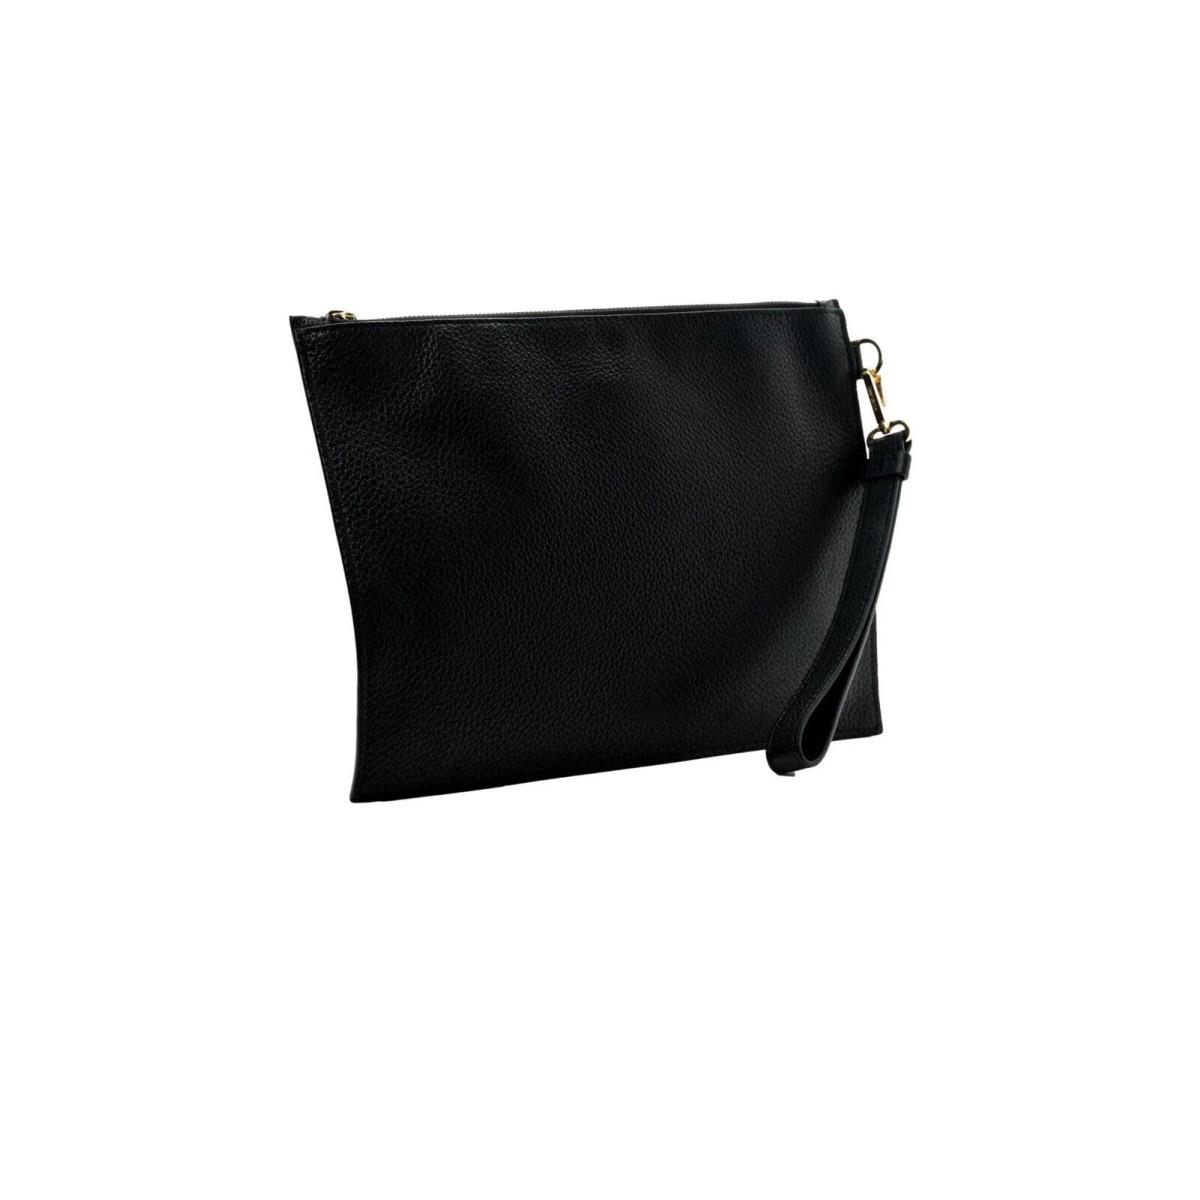 Versace Small Black Pebbled Leather Wristlet Clutch Pouch Evening Handbag